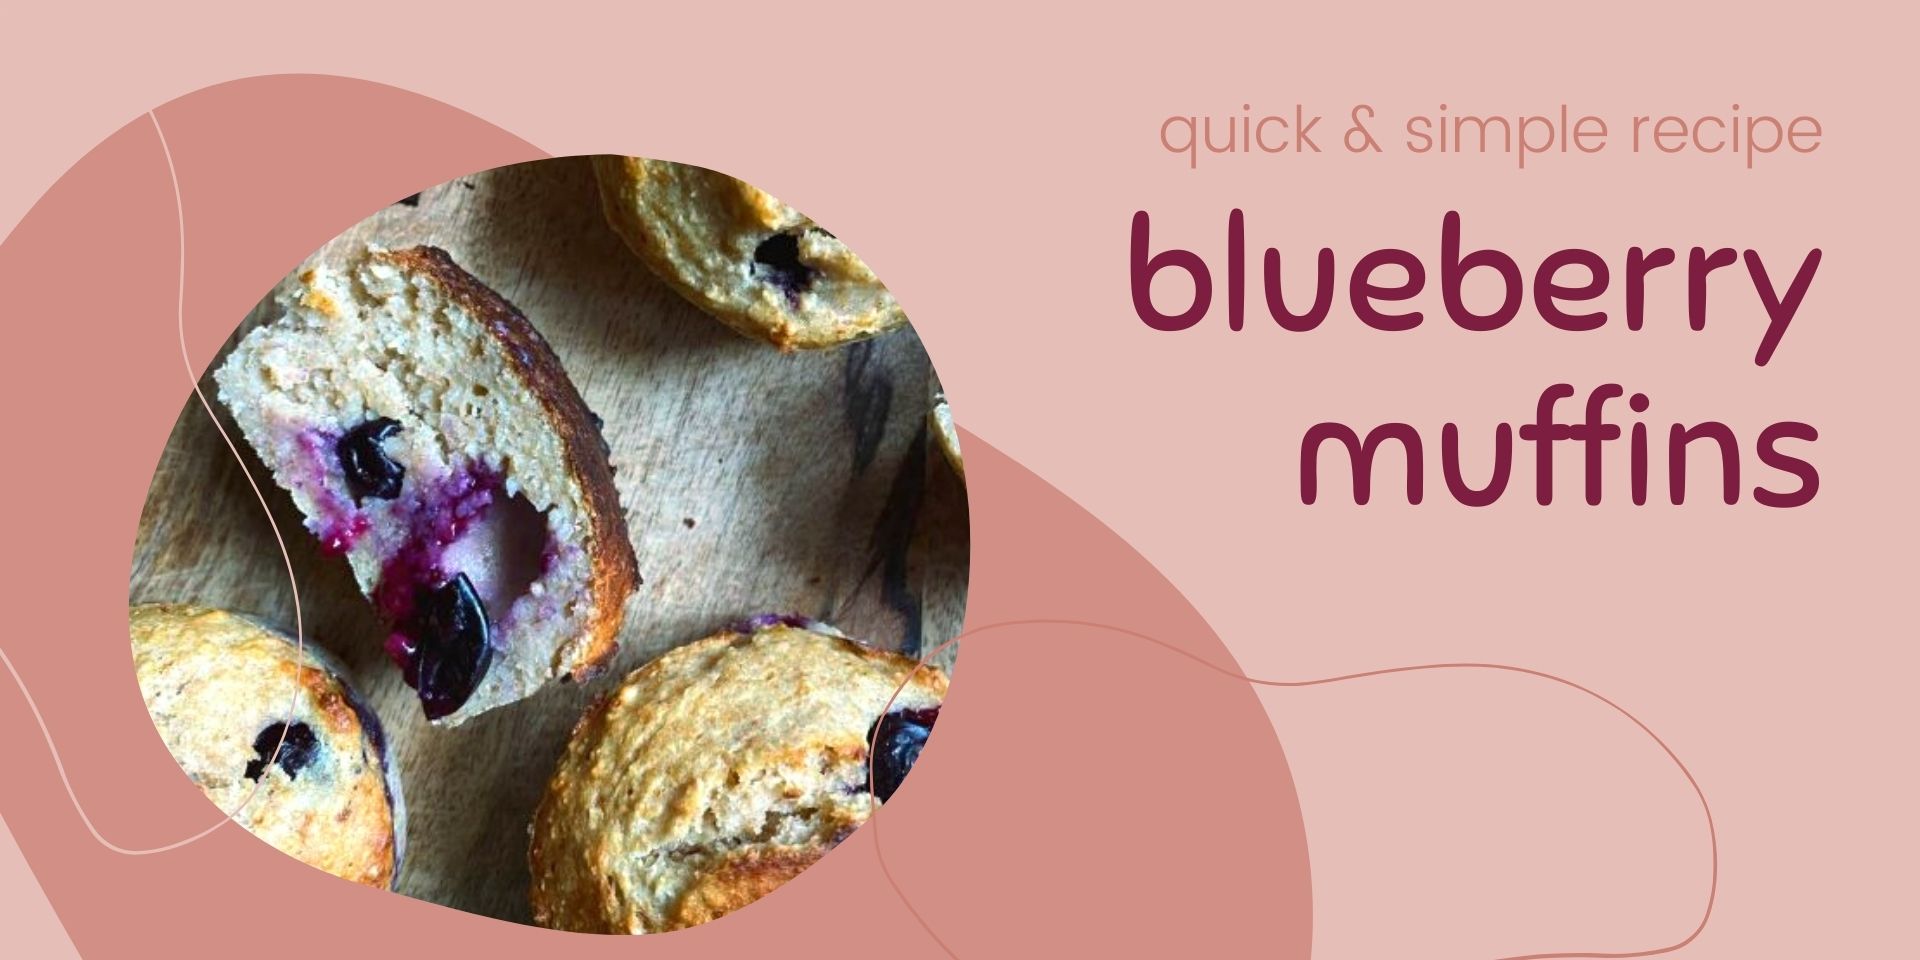 Blueberry muffin recipe web banner